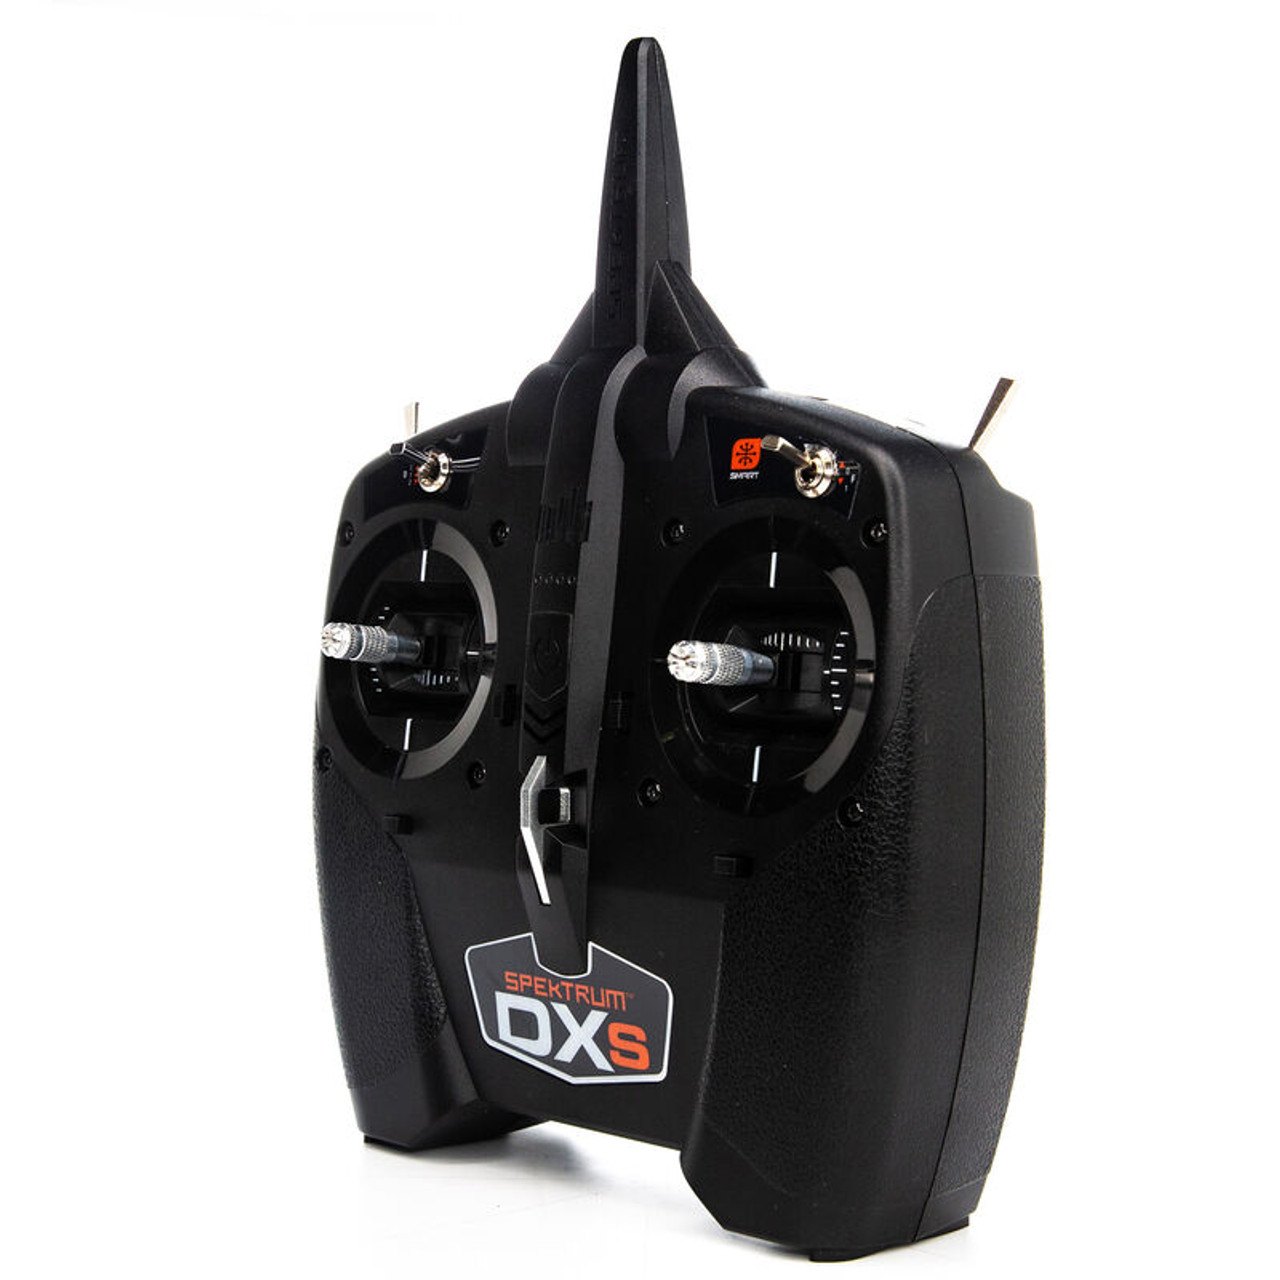 Spektrum RC DXS 7-Channel DSMX Transmitter (Transmitter Only)